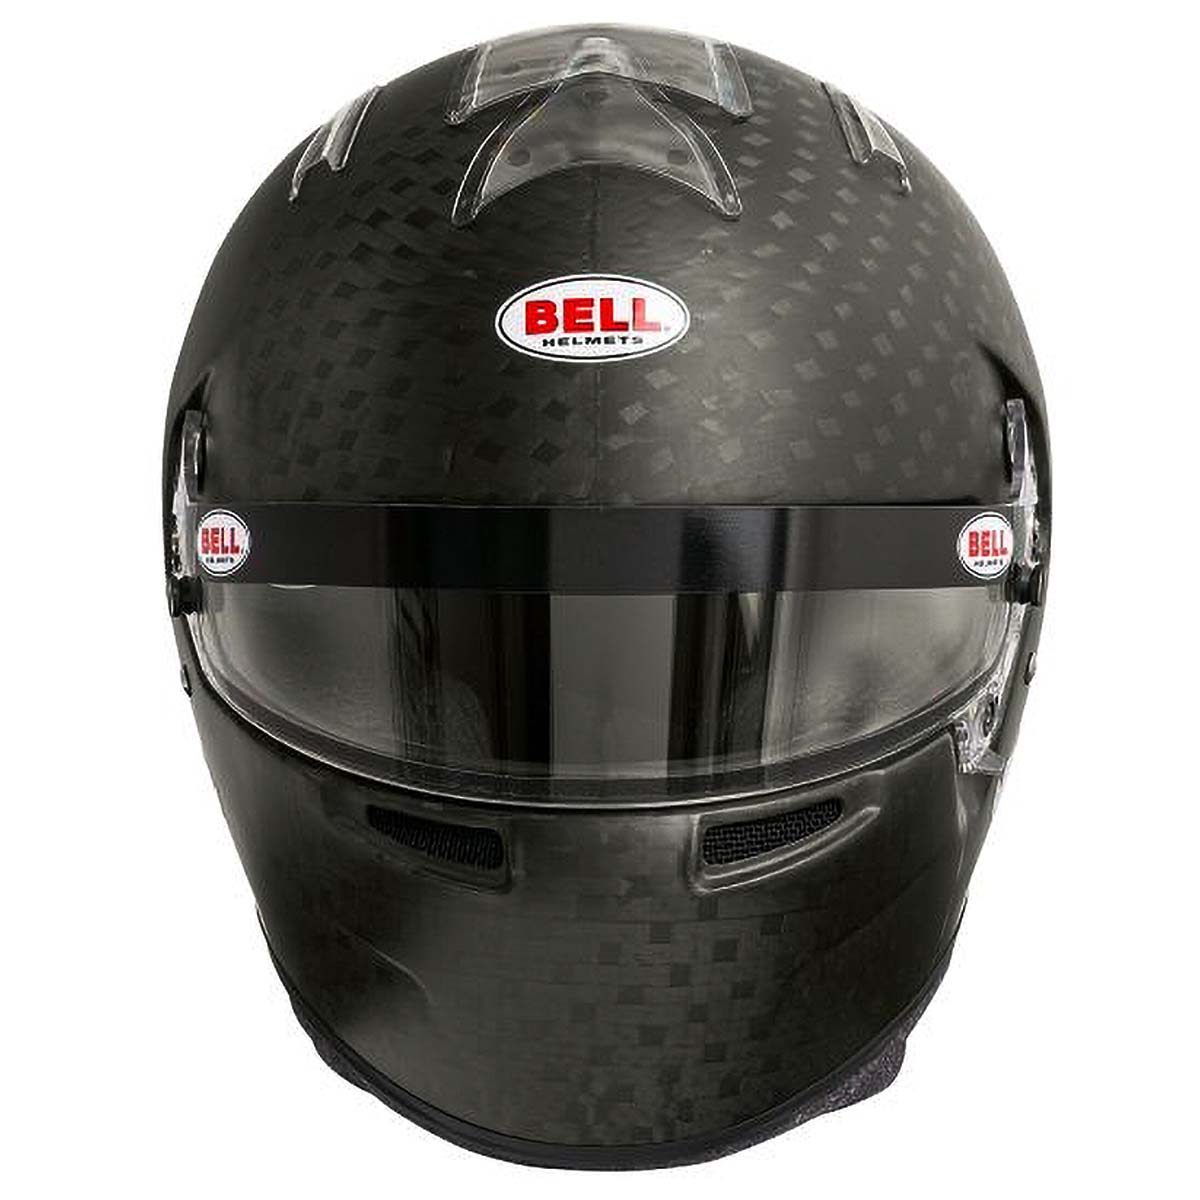 Bell Racing Helmet HP77 Carbon fiber 8860 FIA Snell 2020 front profile